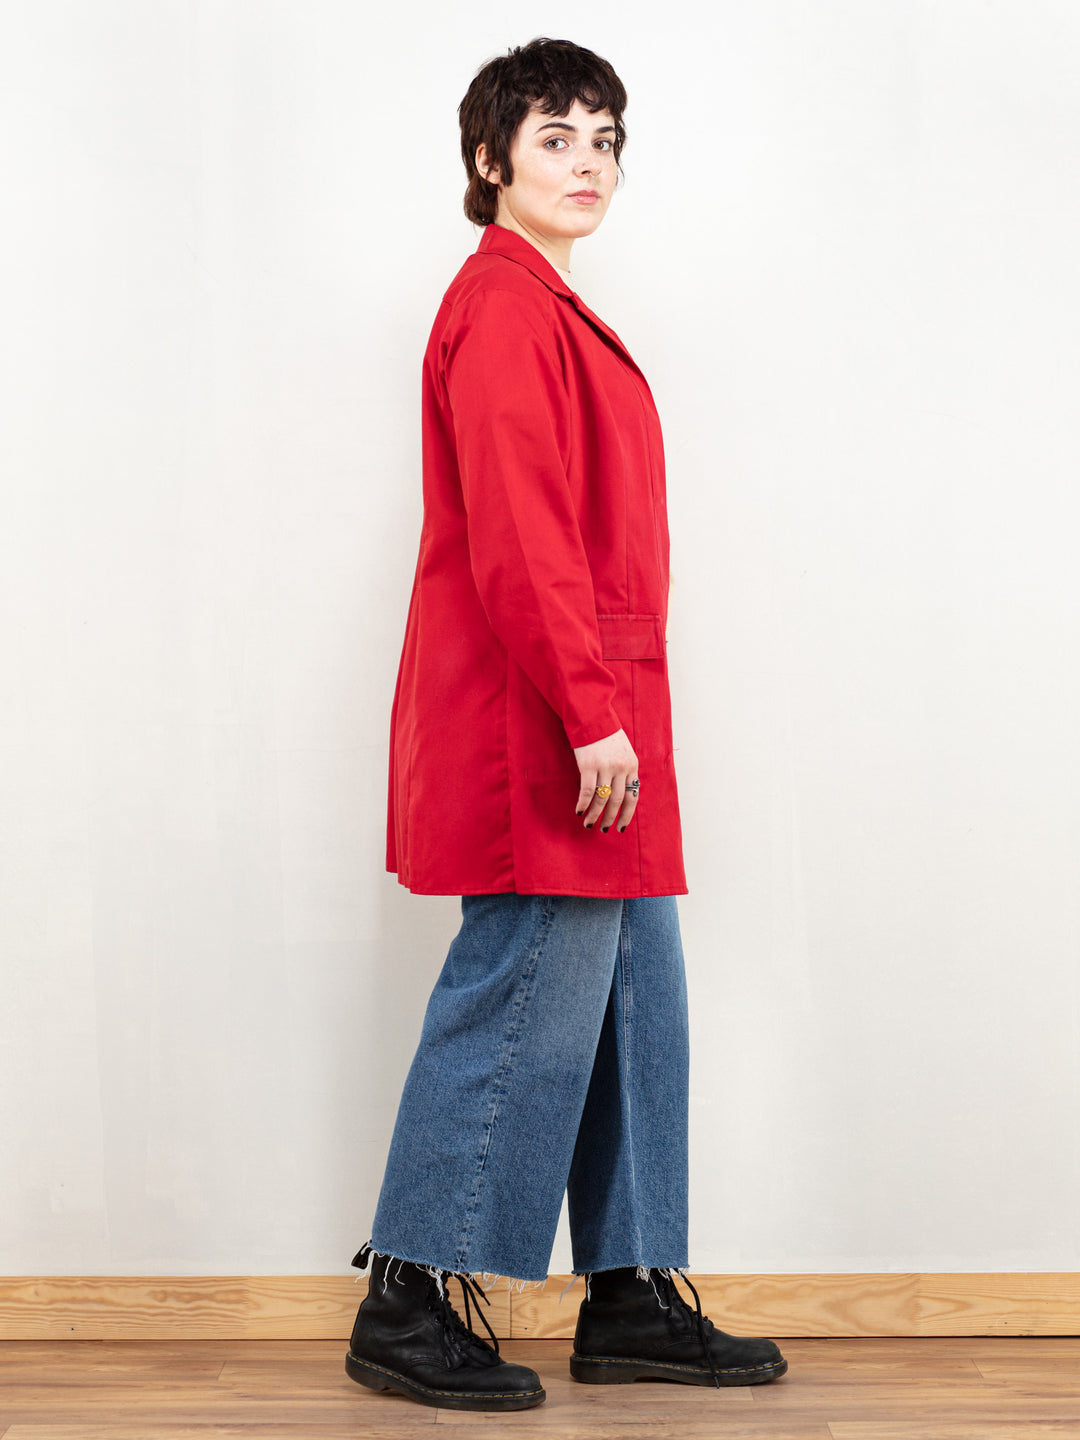 Women Chore Coat vintage red cotton blend light work coat red artist coat manufacturer work coat women workwear 80s clothing size medium